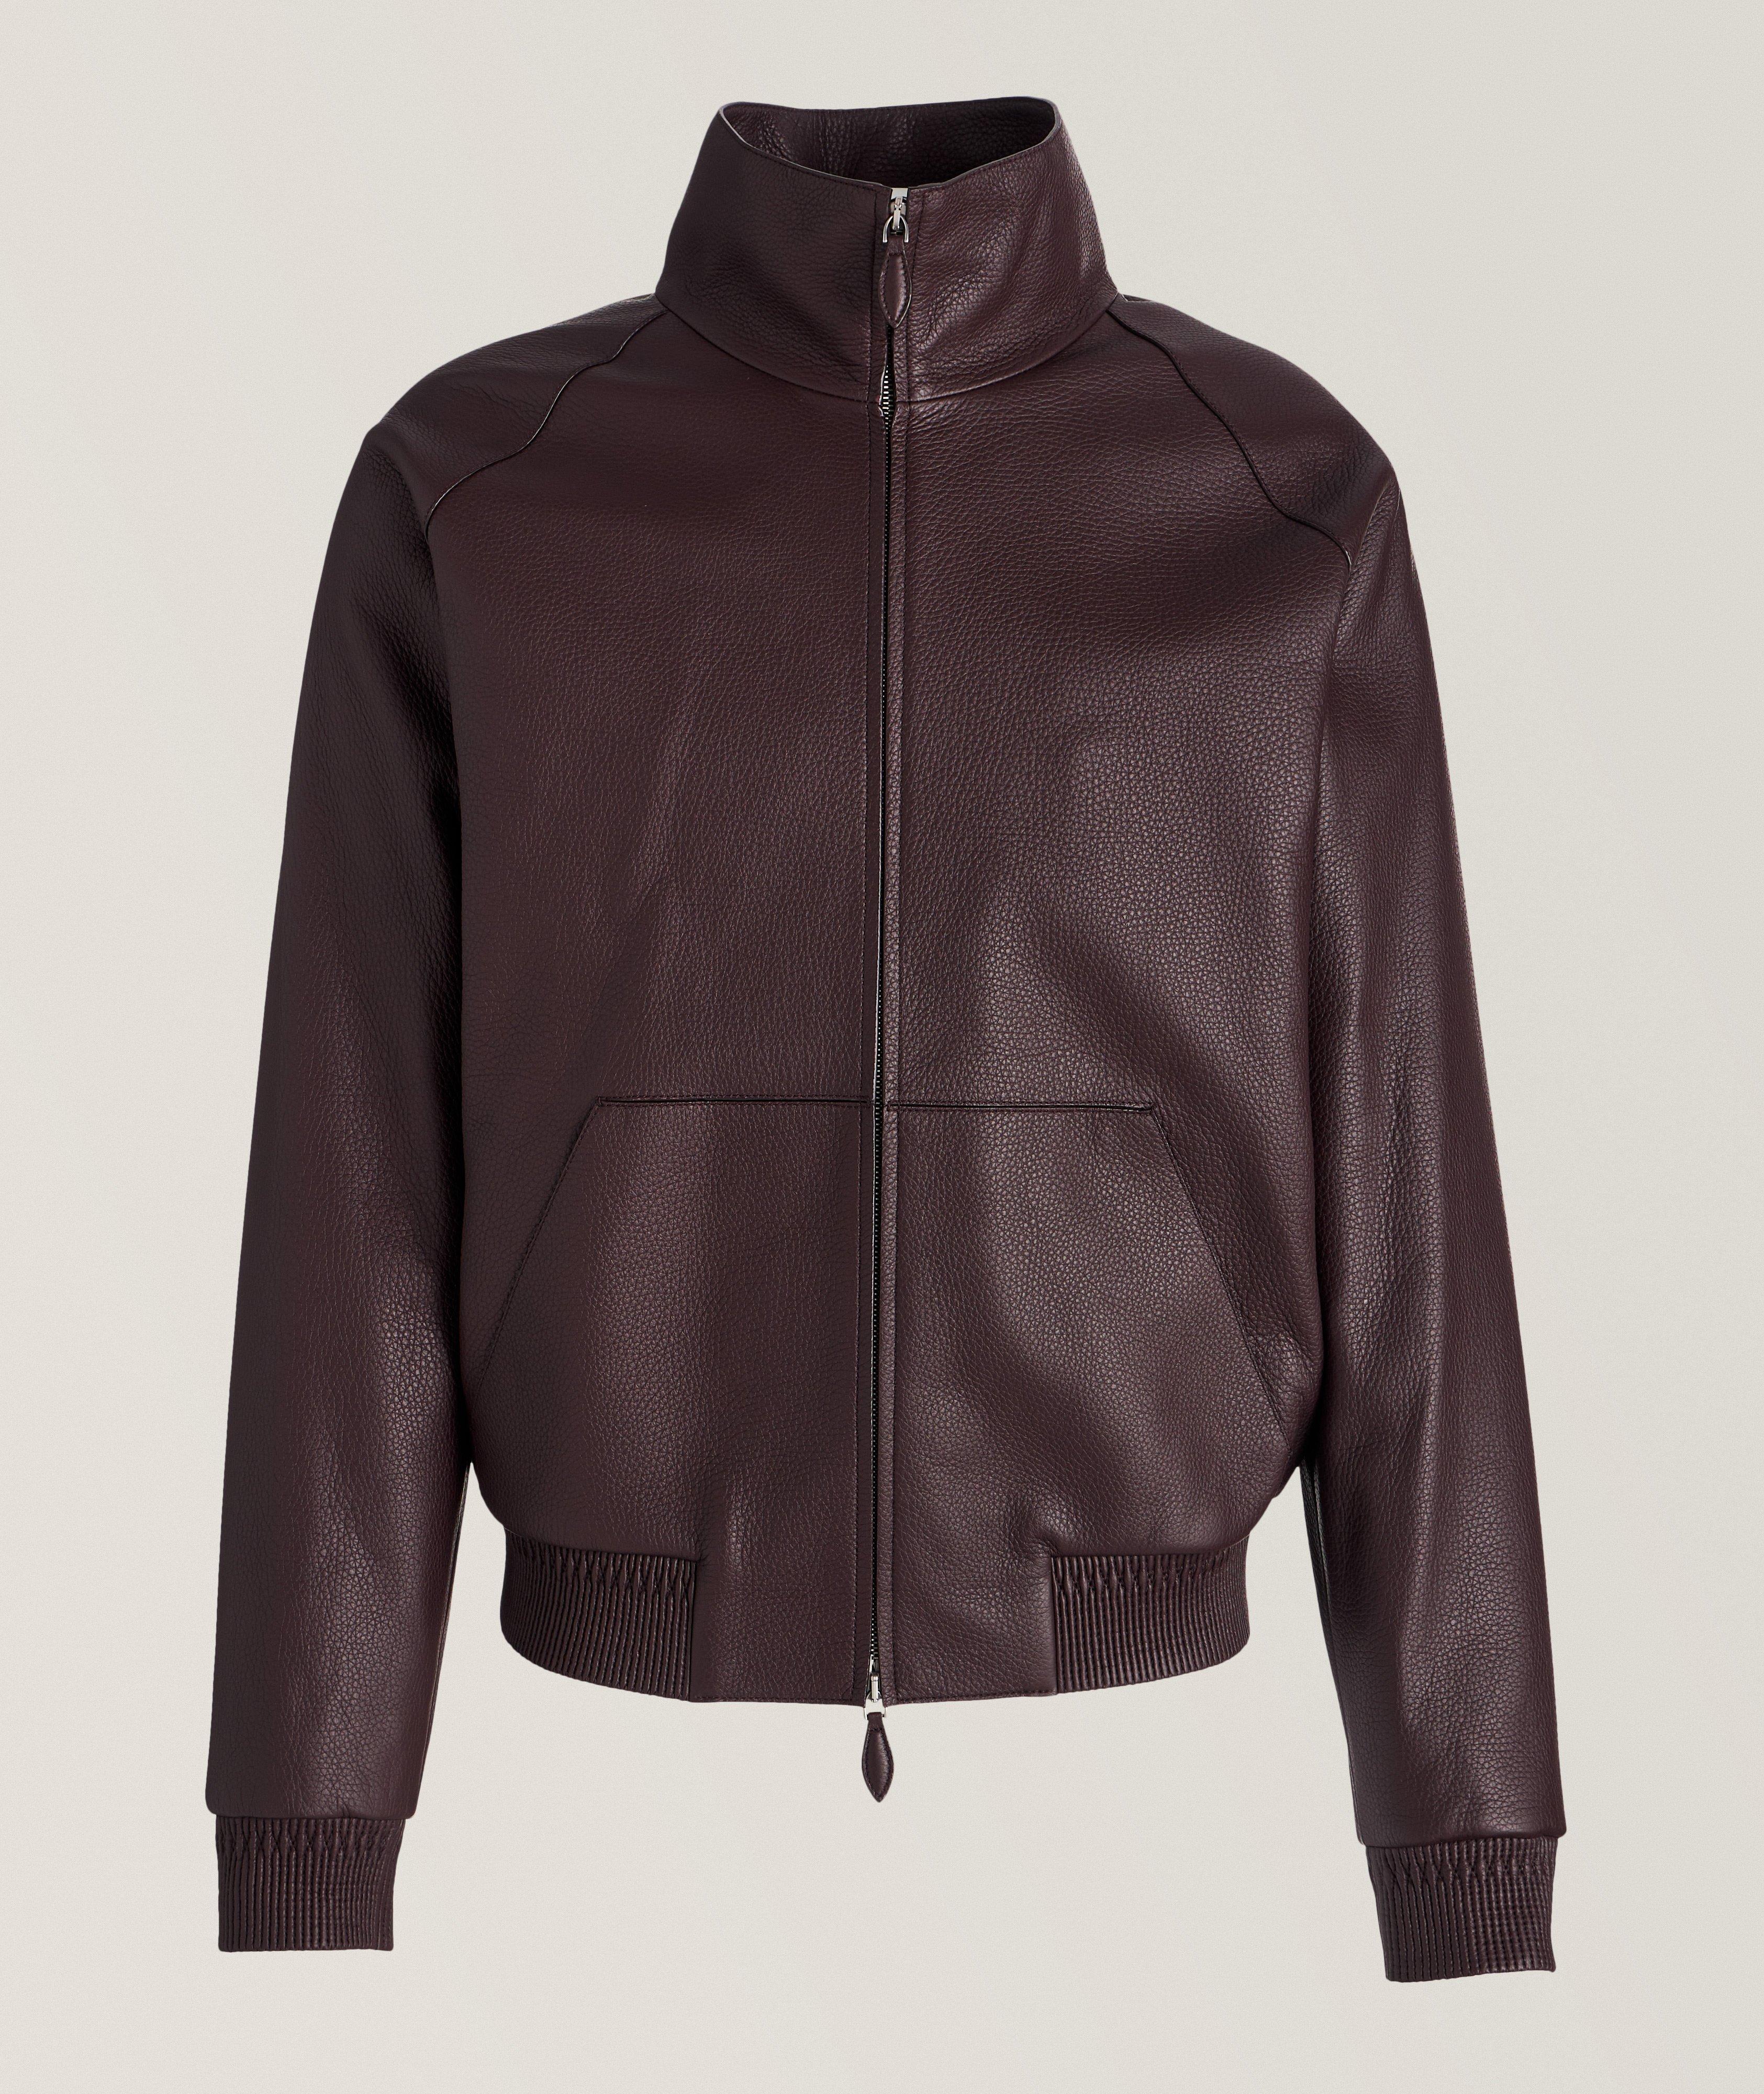 Deerskin Leather Jacket image 0